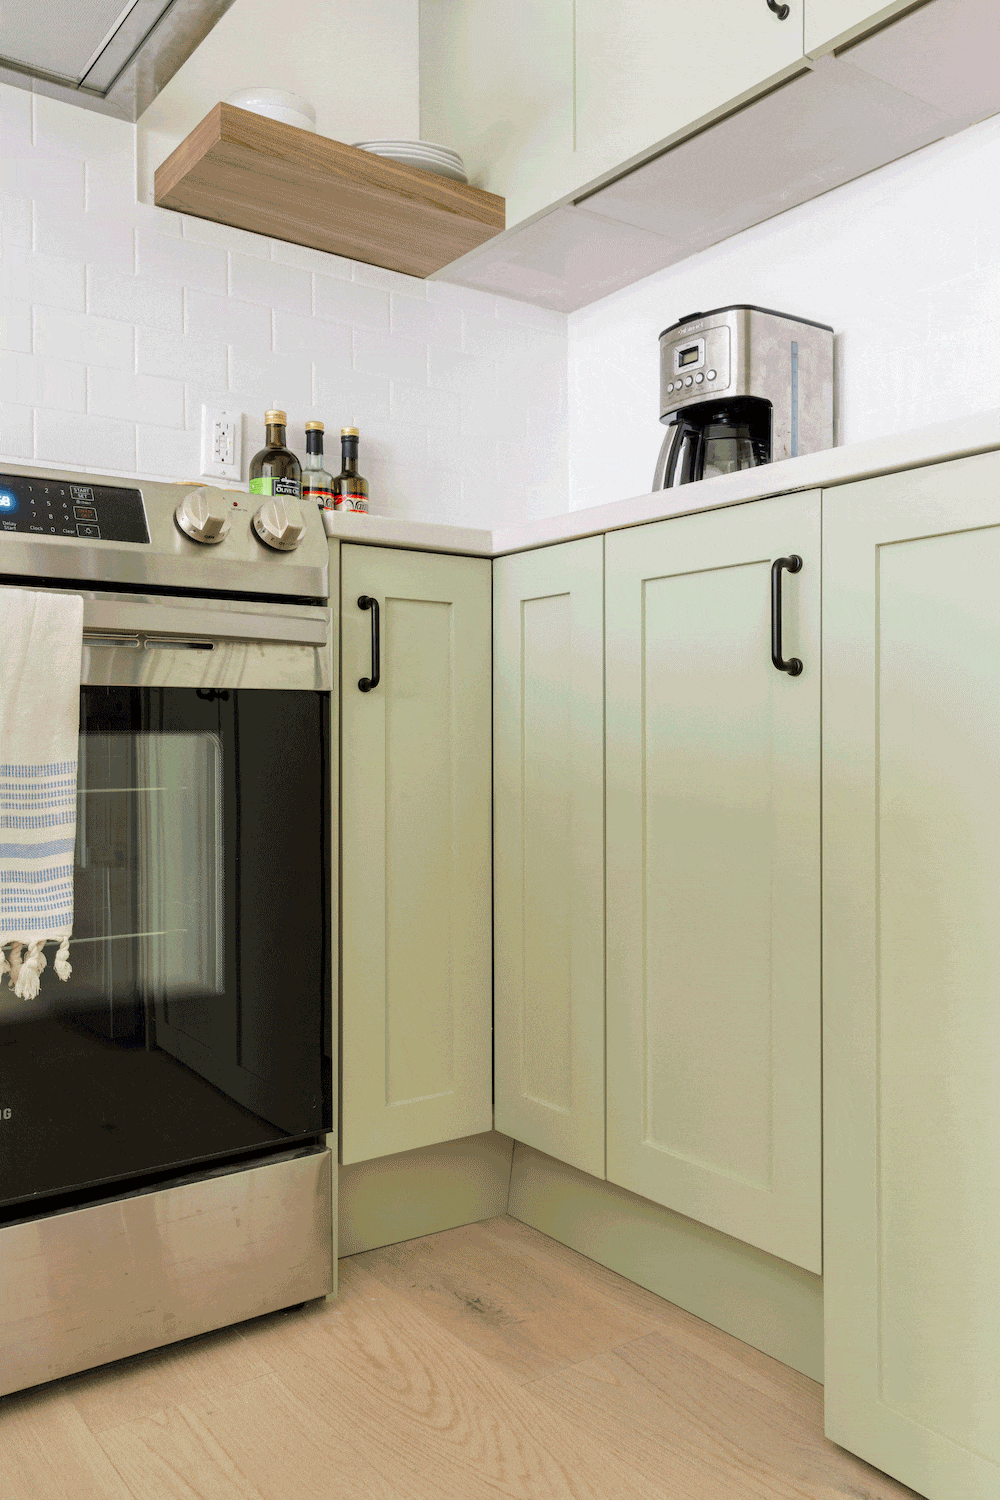 Corner cabinets expose built-in kitchen storage shelving